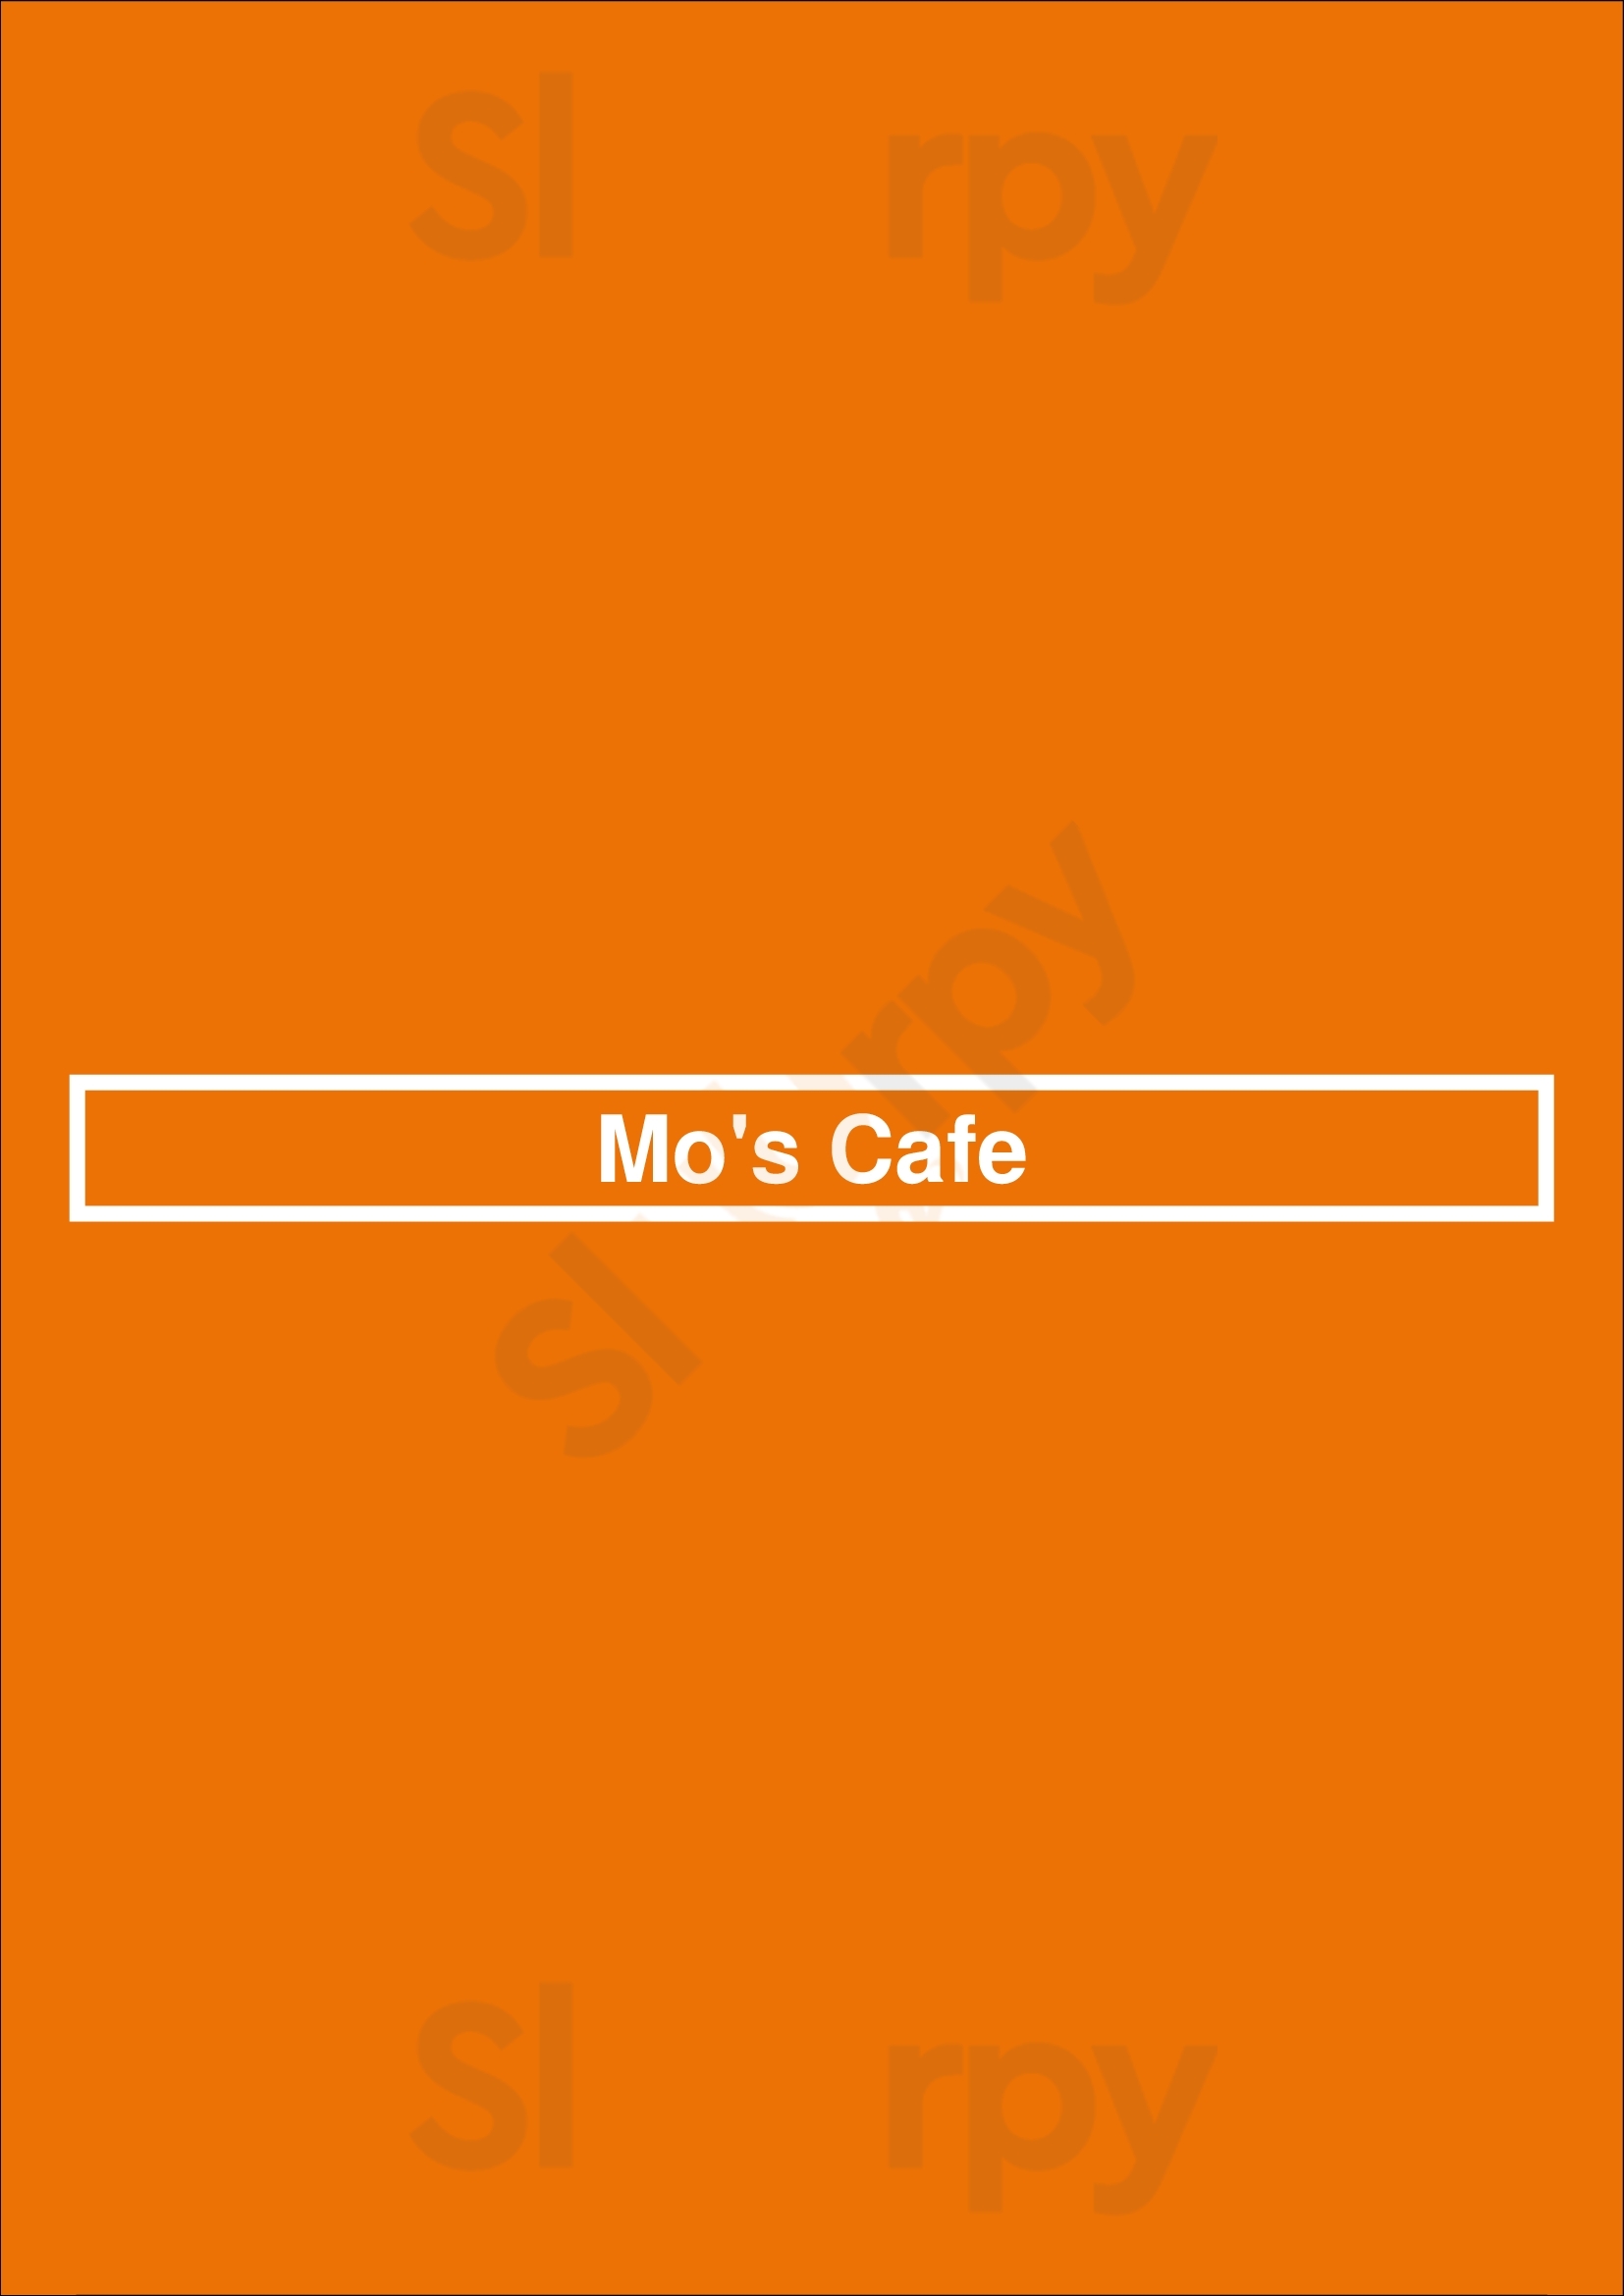 Mo's Cafe Vancouver Menu - 1